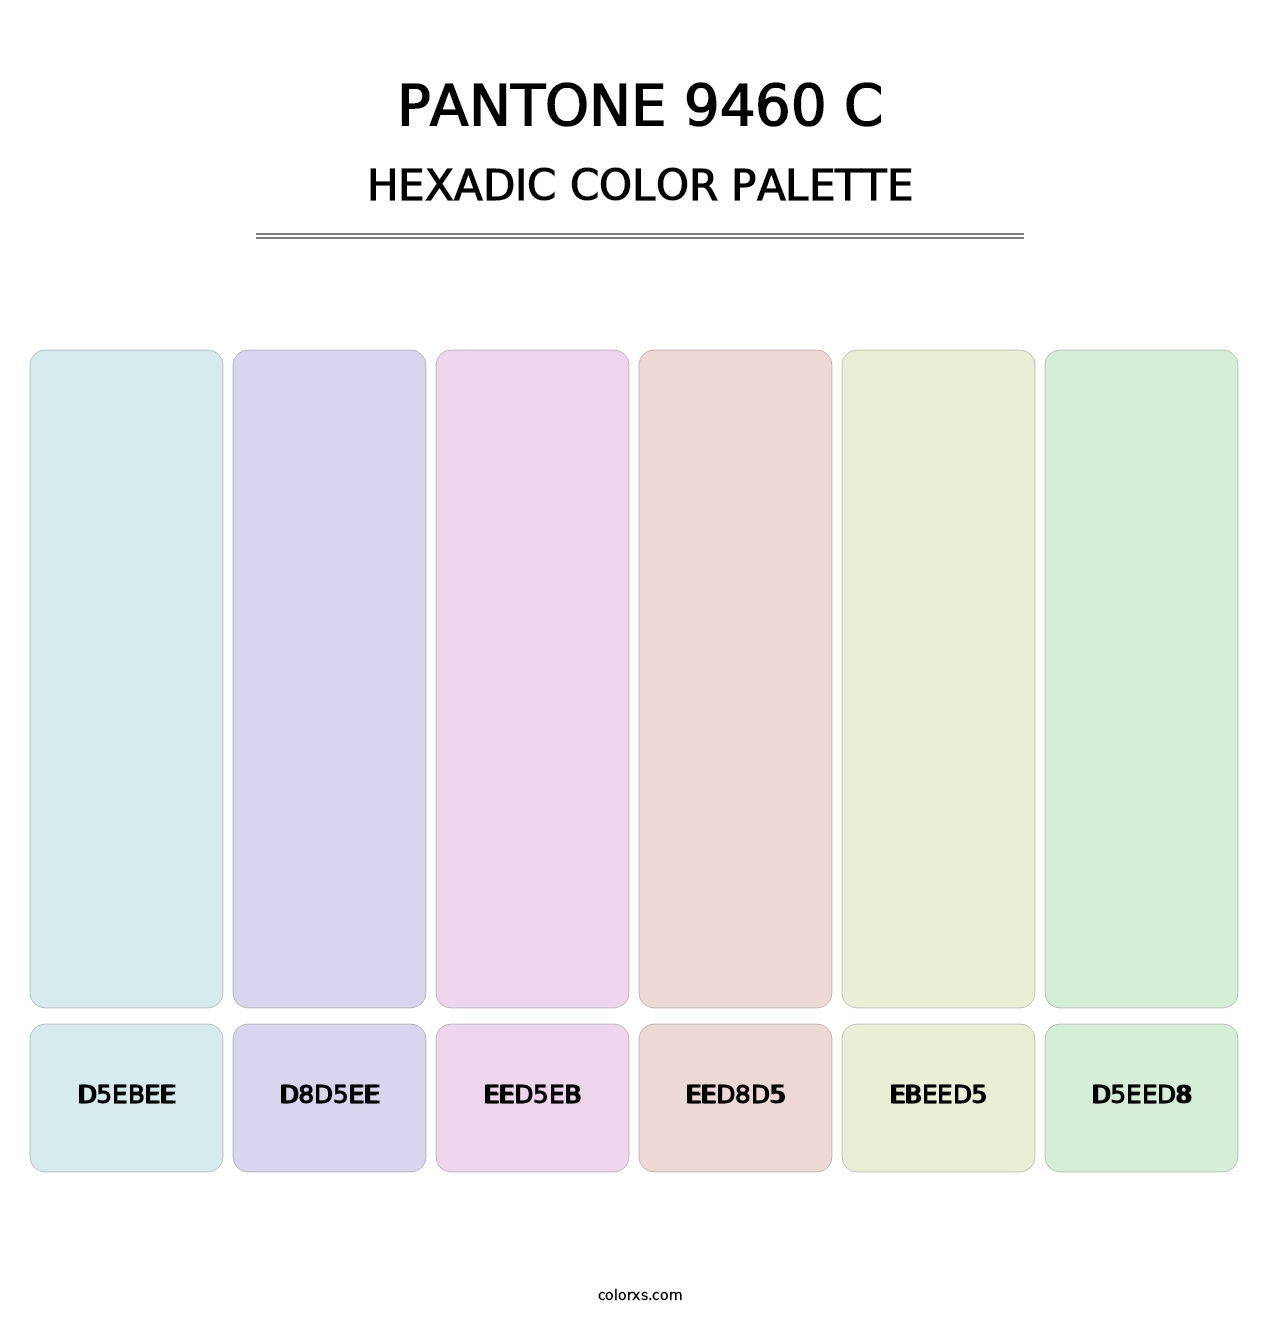 PANTONE 9460 C - Hexadic Color Palette